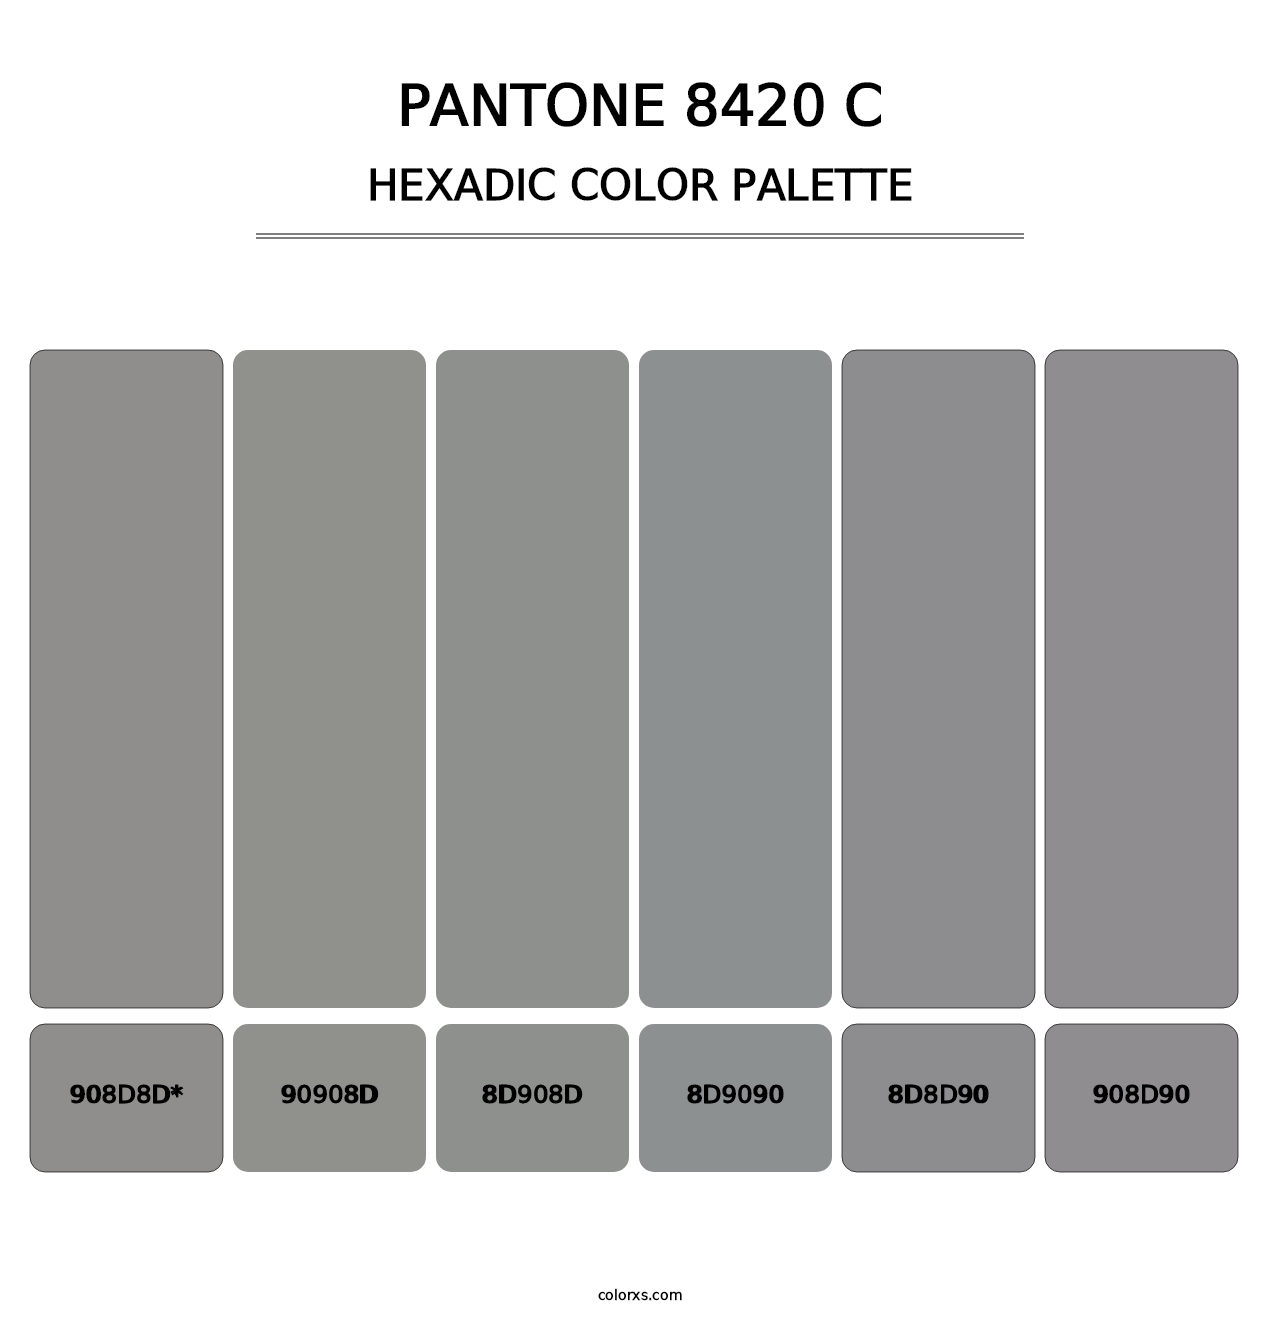 PANTONE 8420 C - Hexadic Color Palette